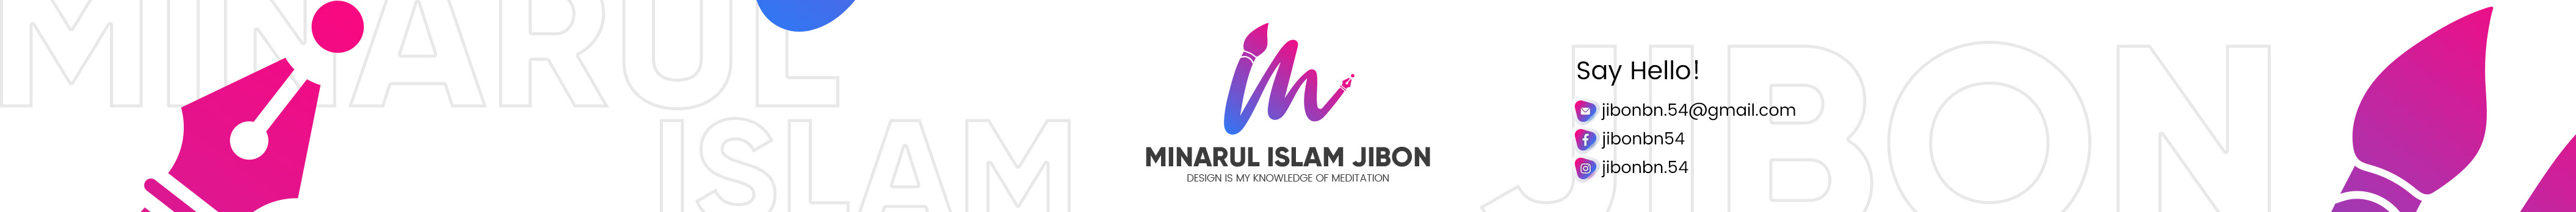 Minarul Islam Jibon's profile banner